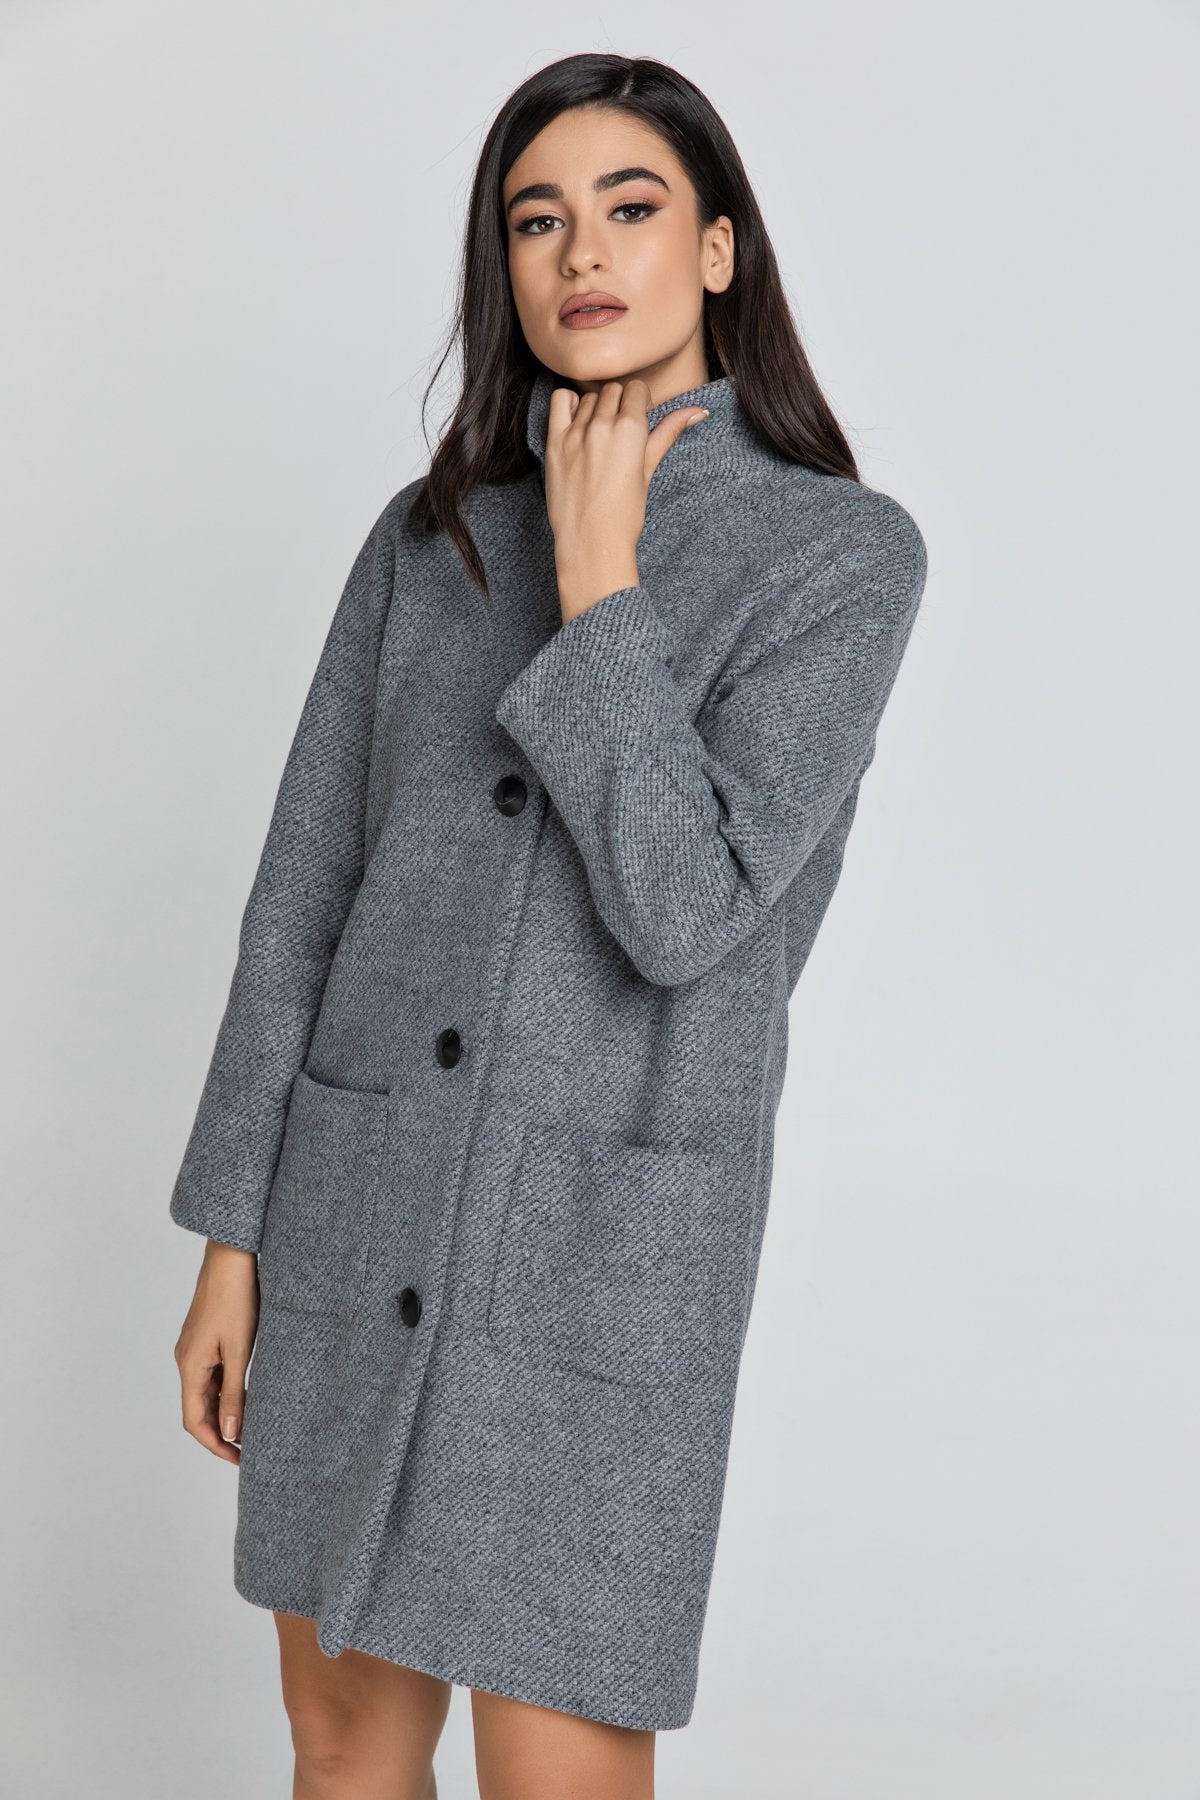 Wool Blend Grey Coat by Conquista Fashion